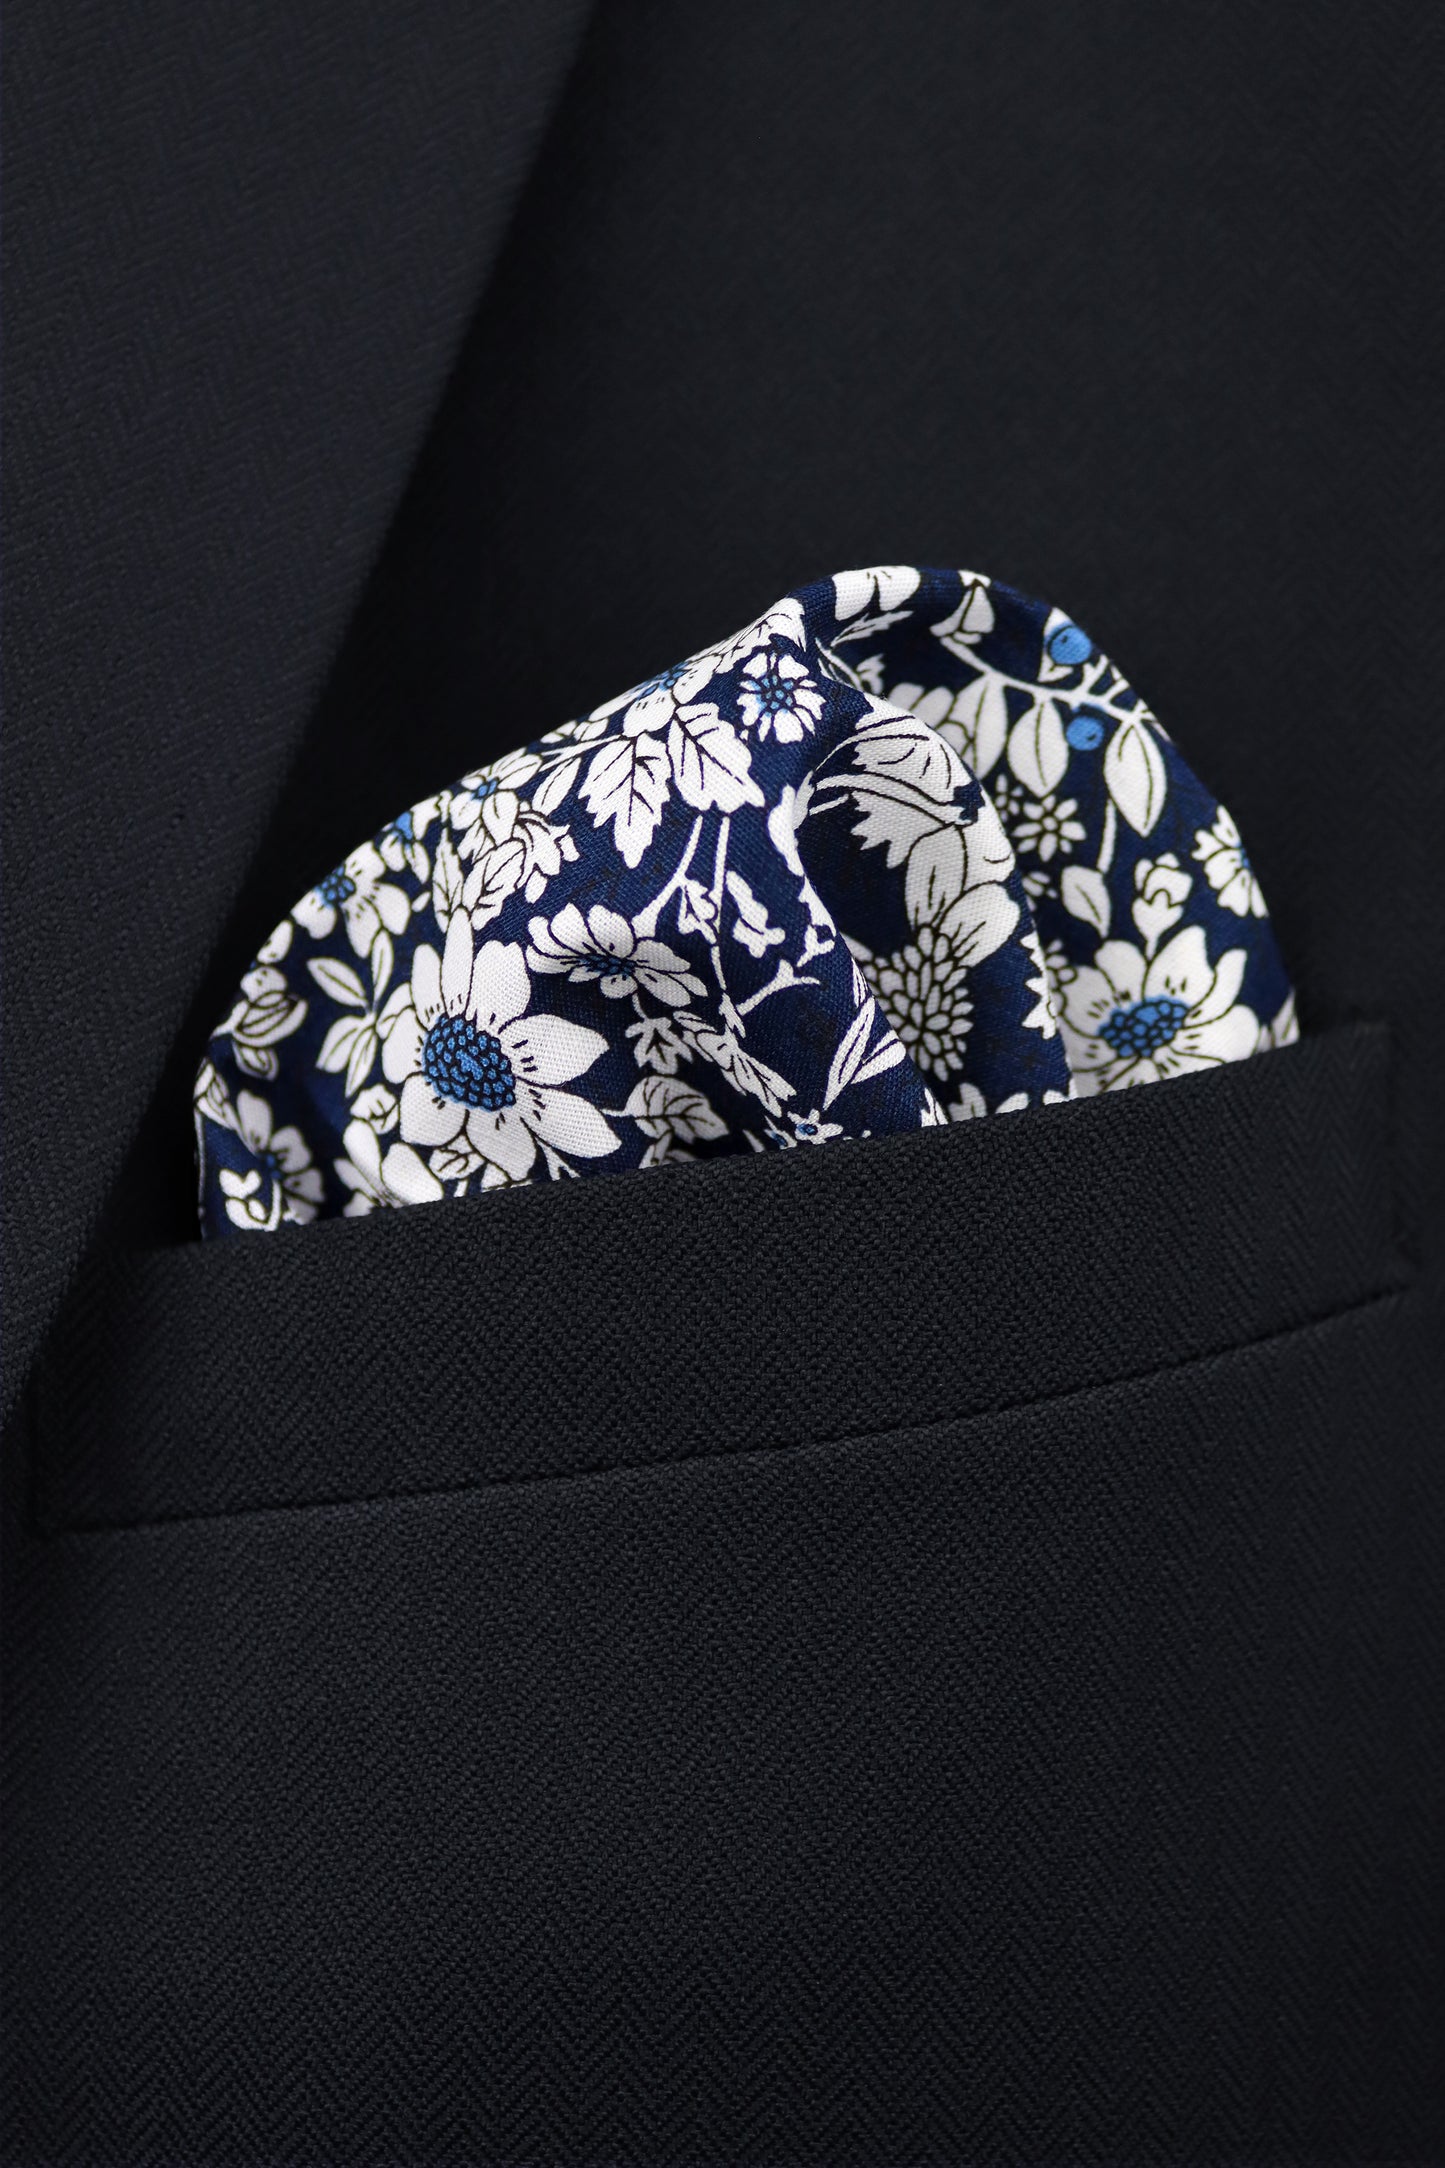 100% Cotton Floral Print Tie - Navy Blue & White